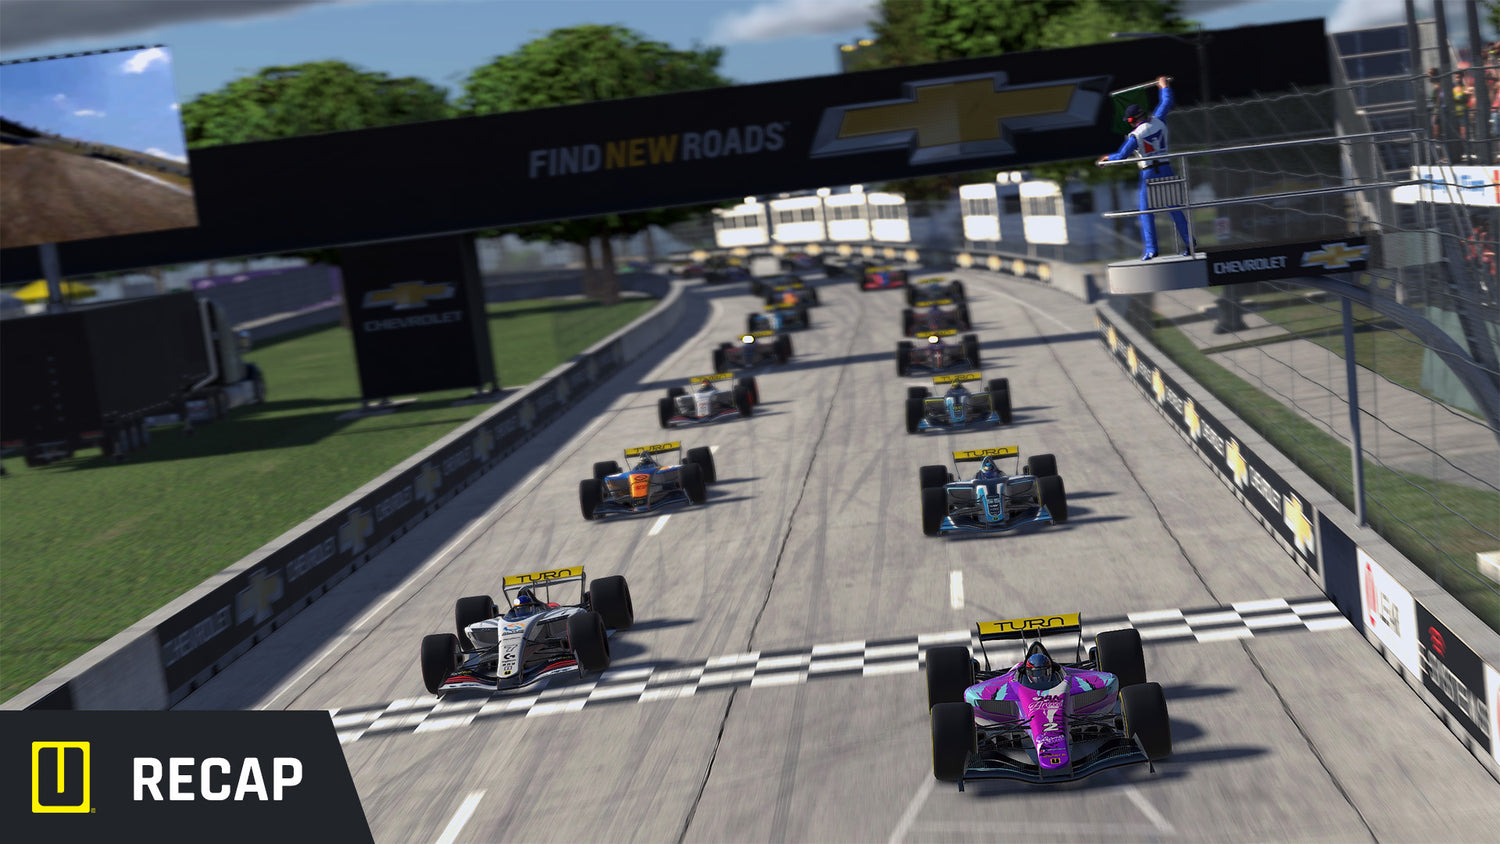 Grand Prix Turn Racing iRacing Series Race 6 Recap